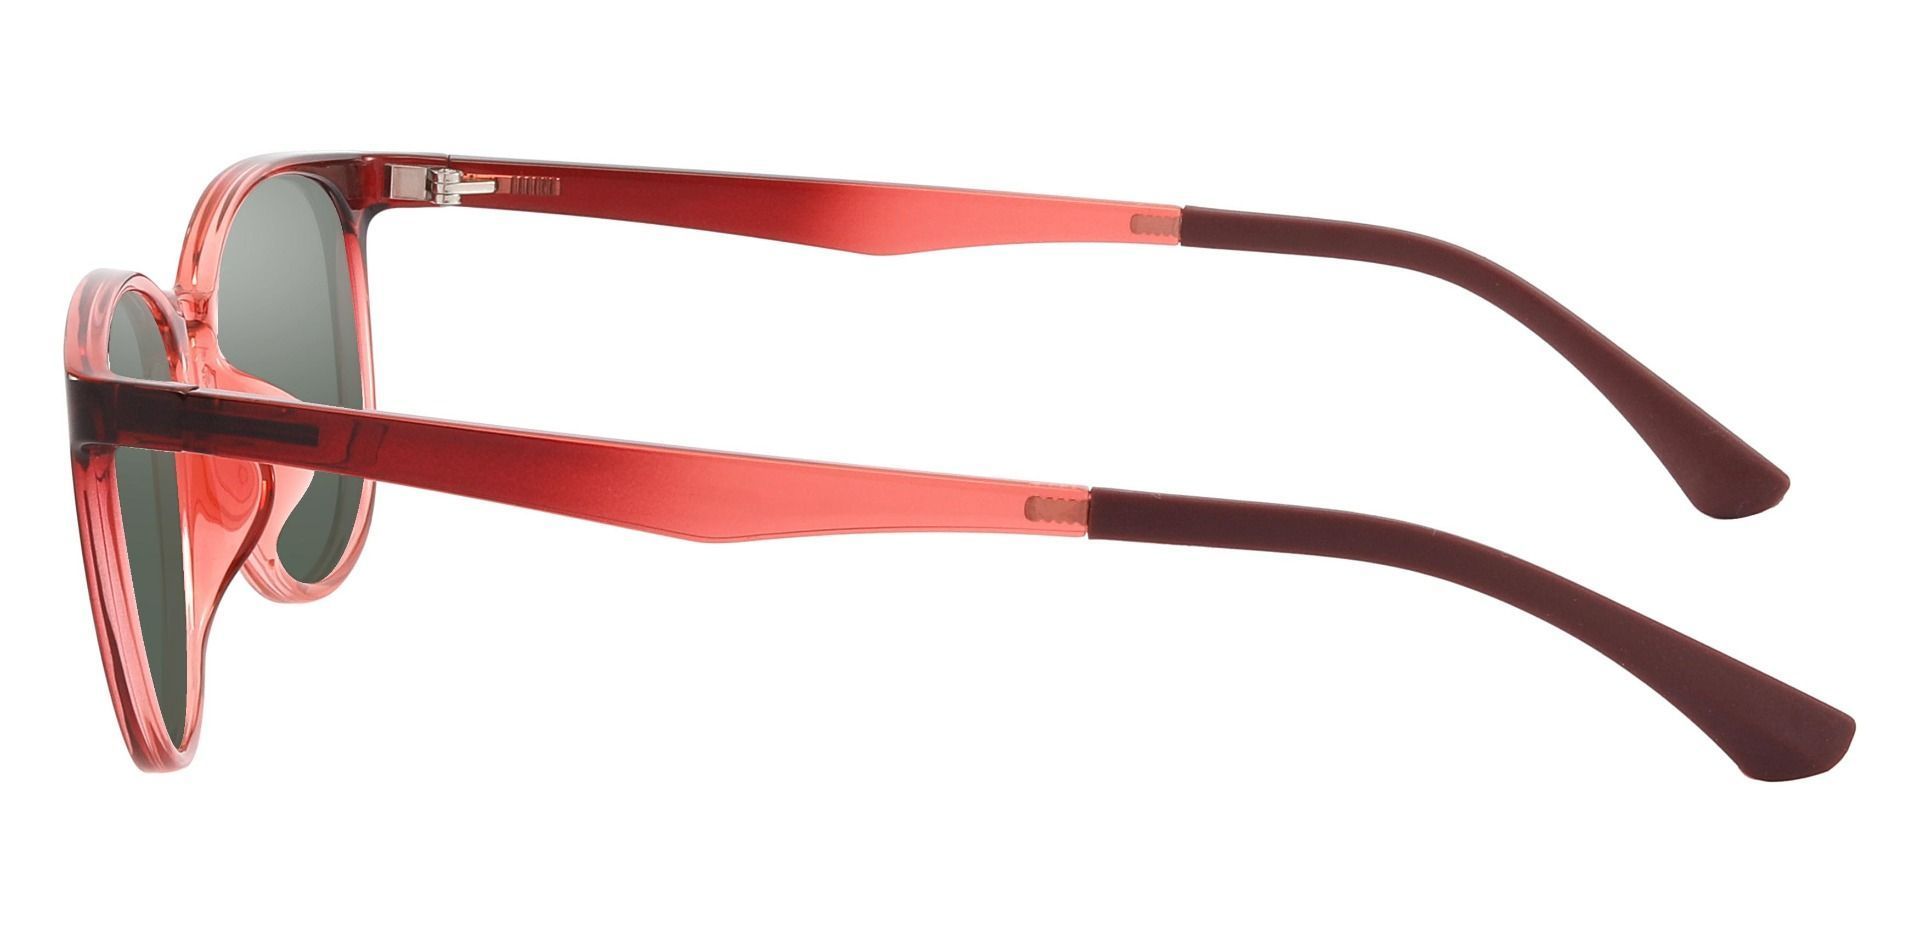 Pembroke Oval Prescription Sunglasses - Pink Frame With Green Lenses